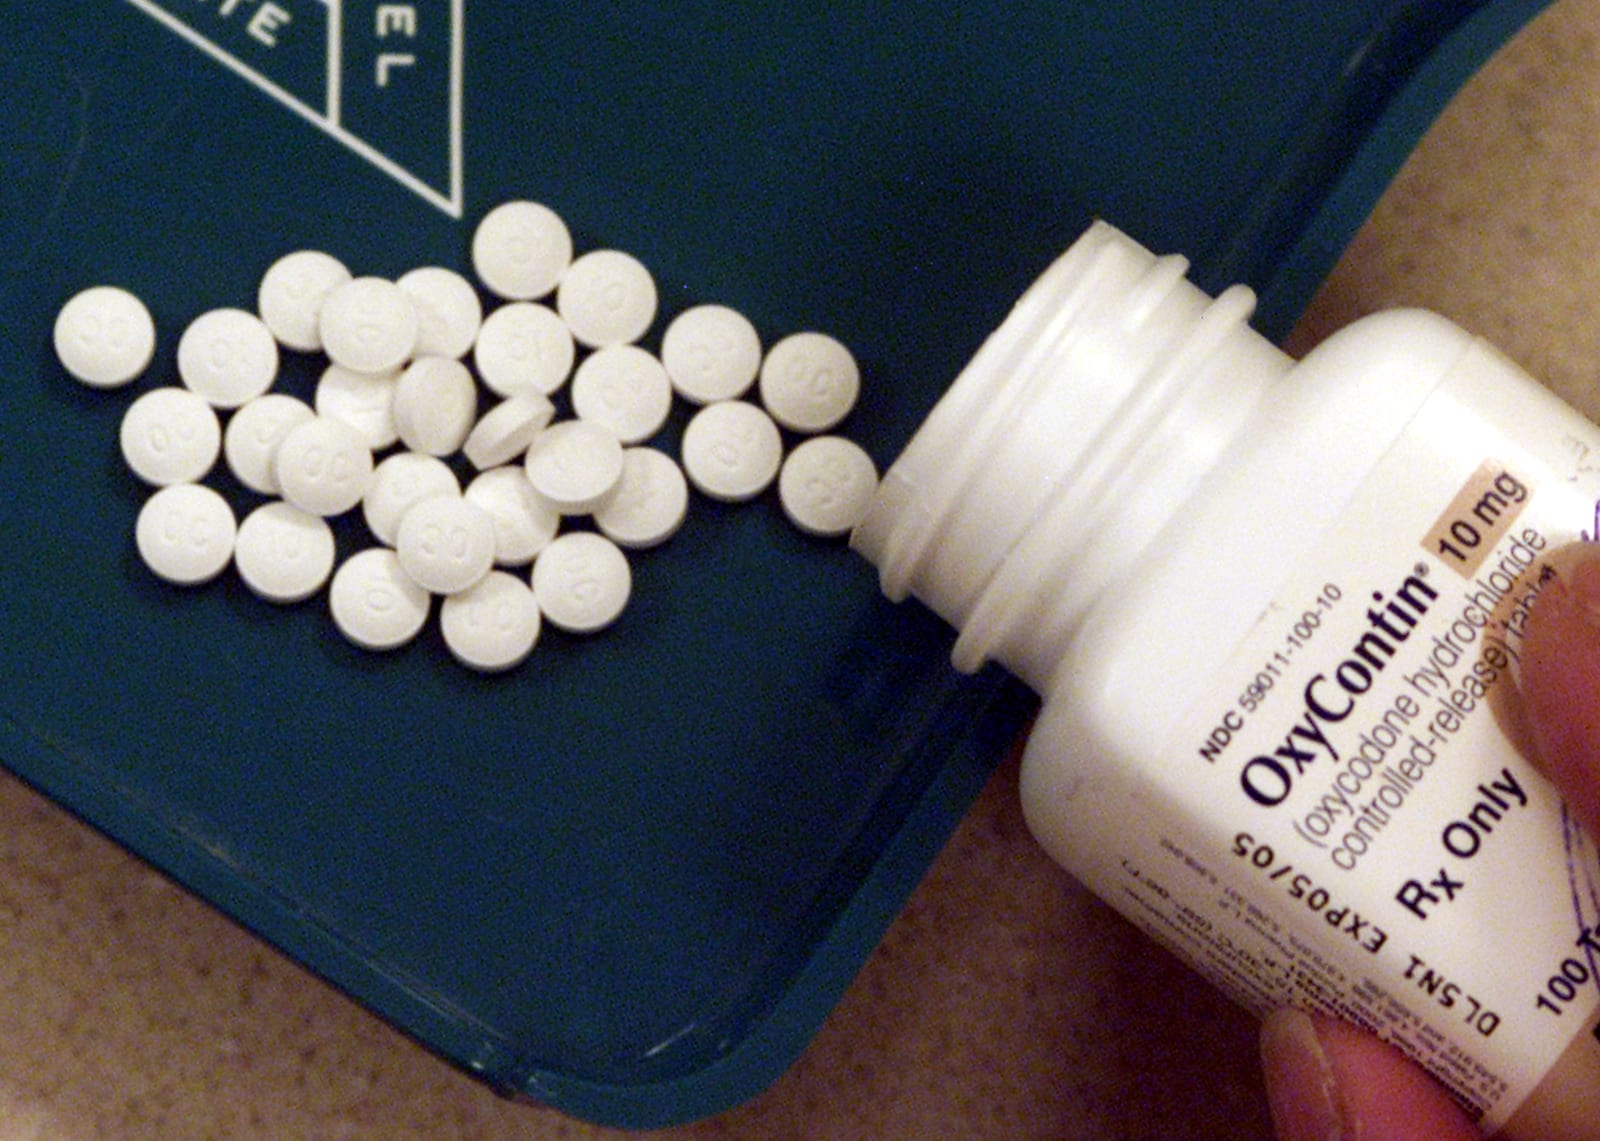 Purdue Pharma offers $10-12 billion to settle opioid claims